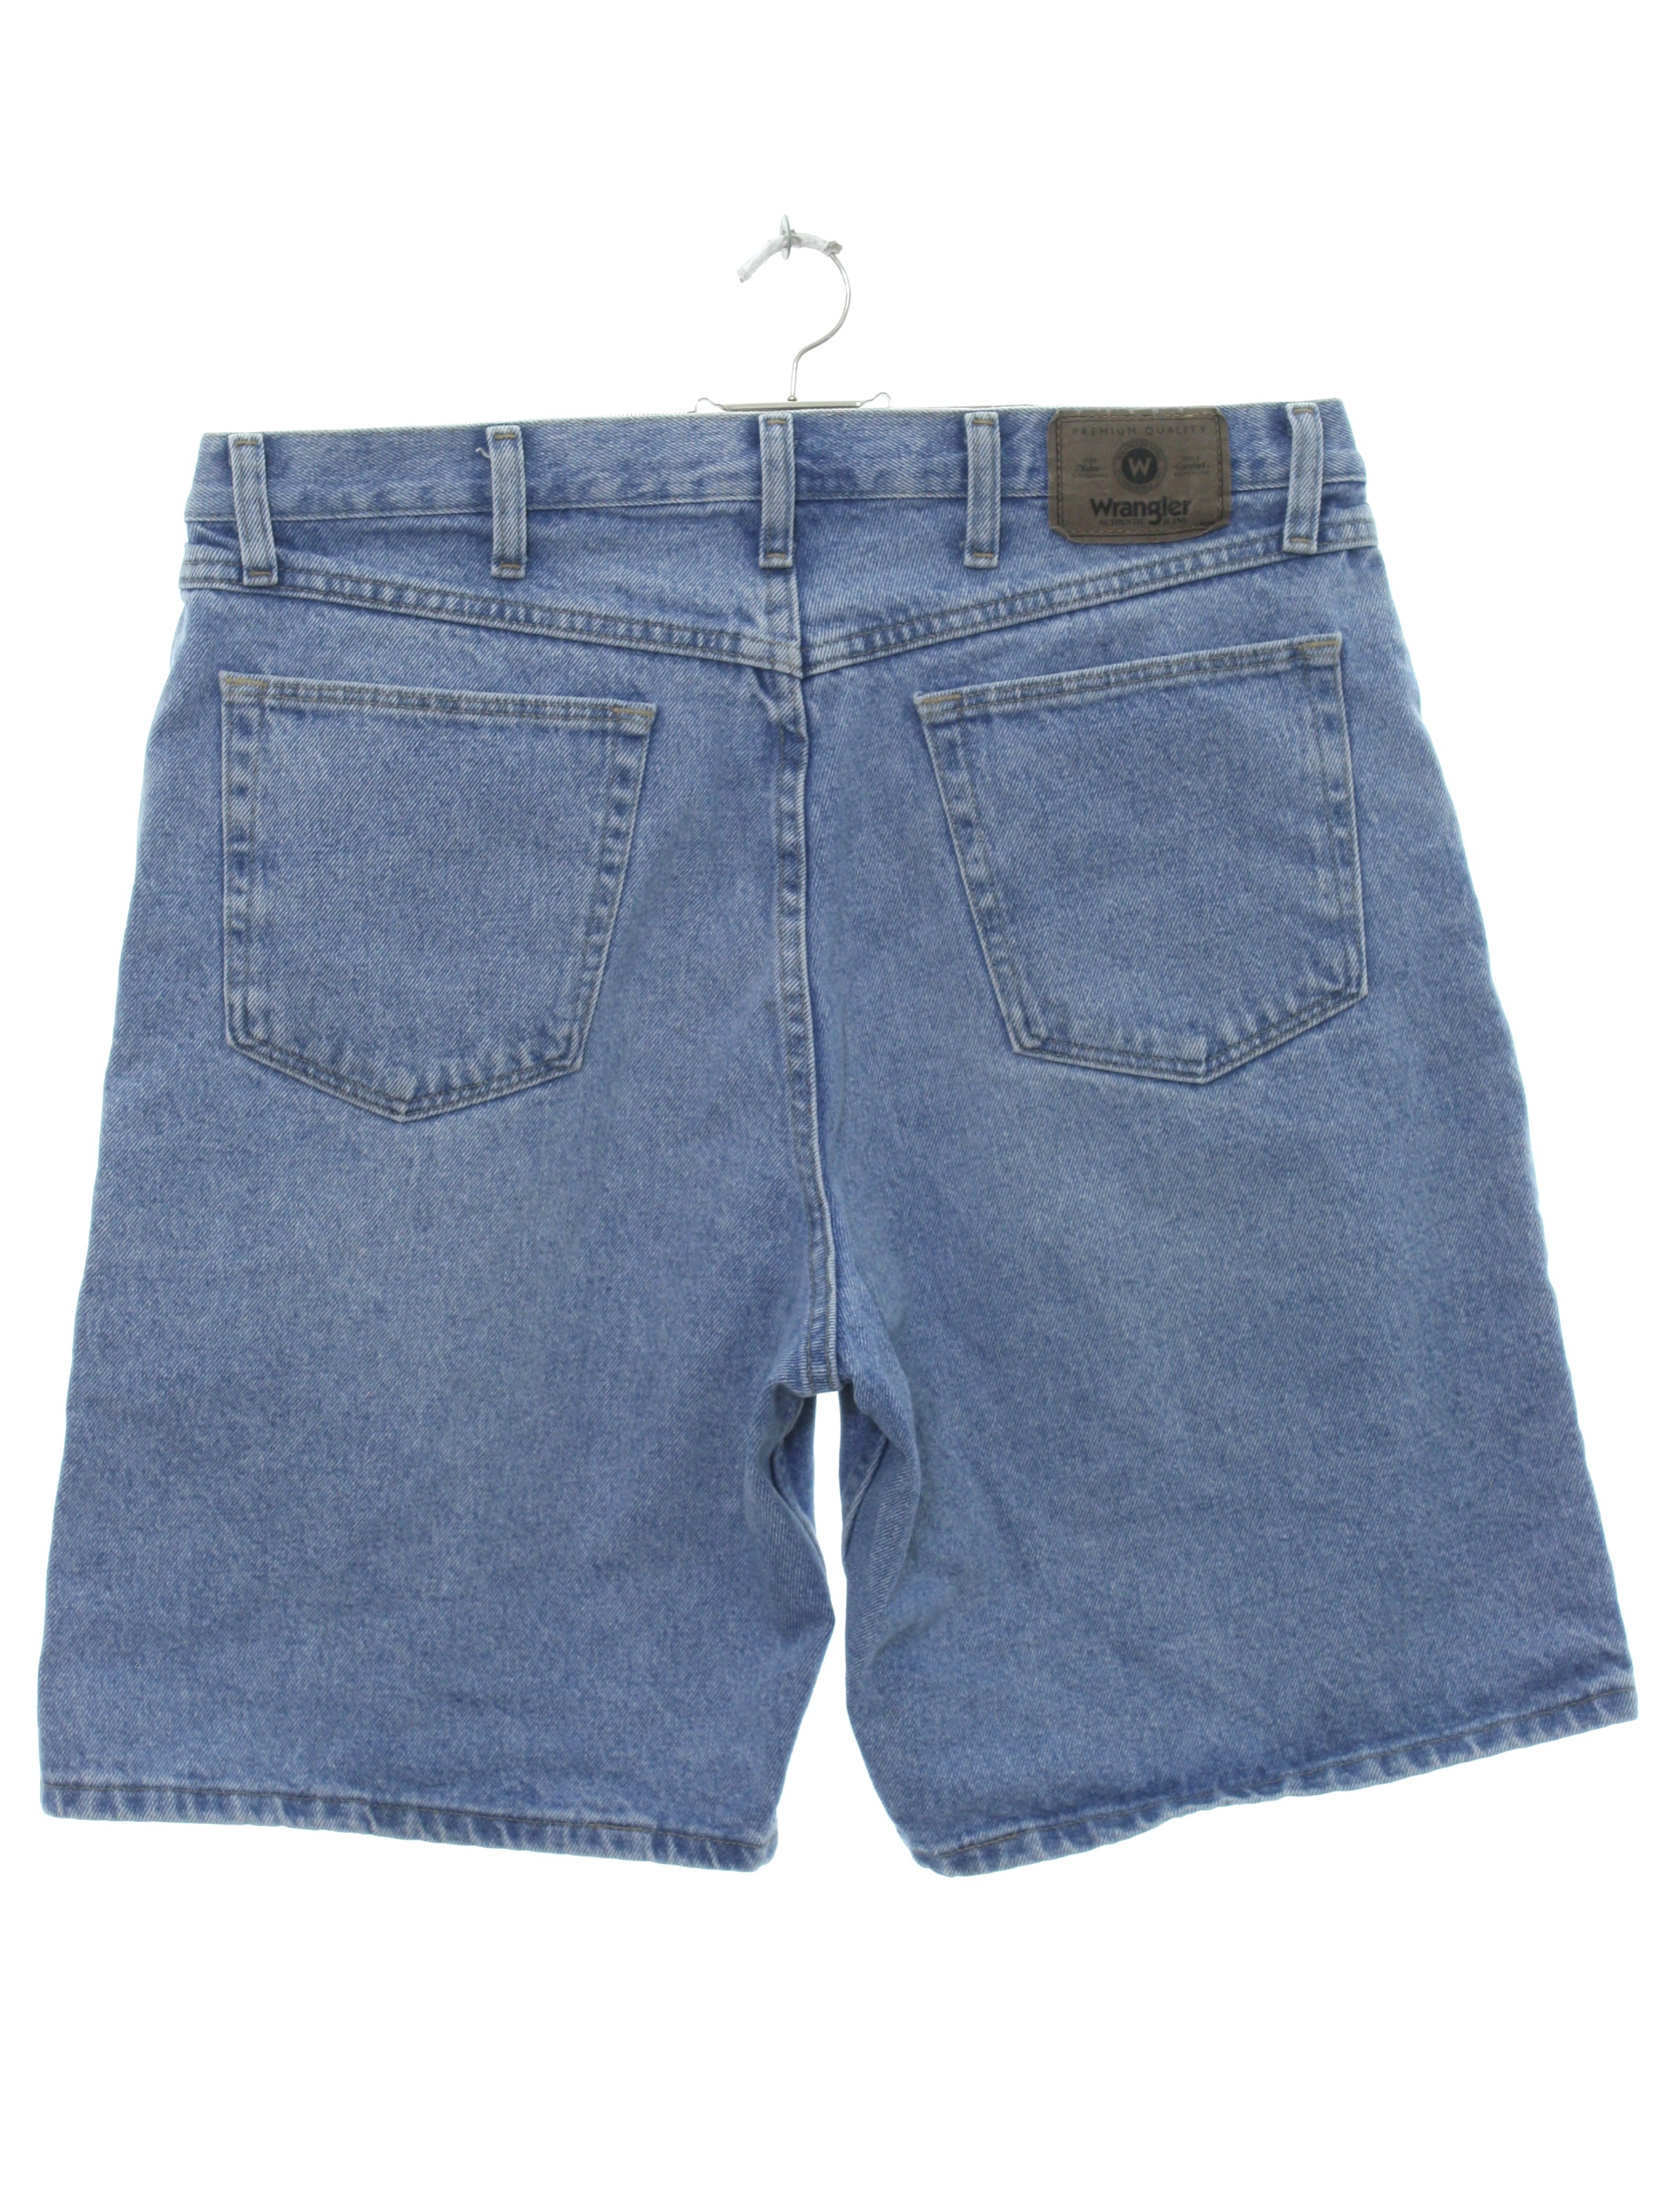 Vintage 90s Shorts: 90s -Wrangler- Mens light wash blue cotton denim ...